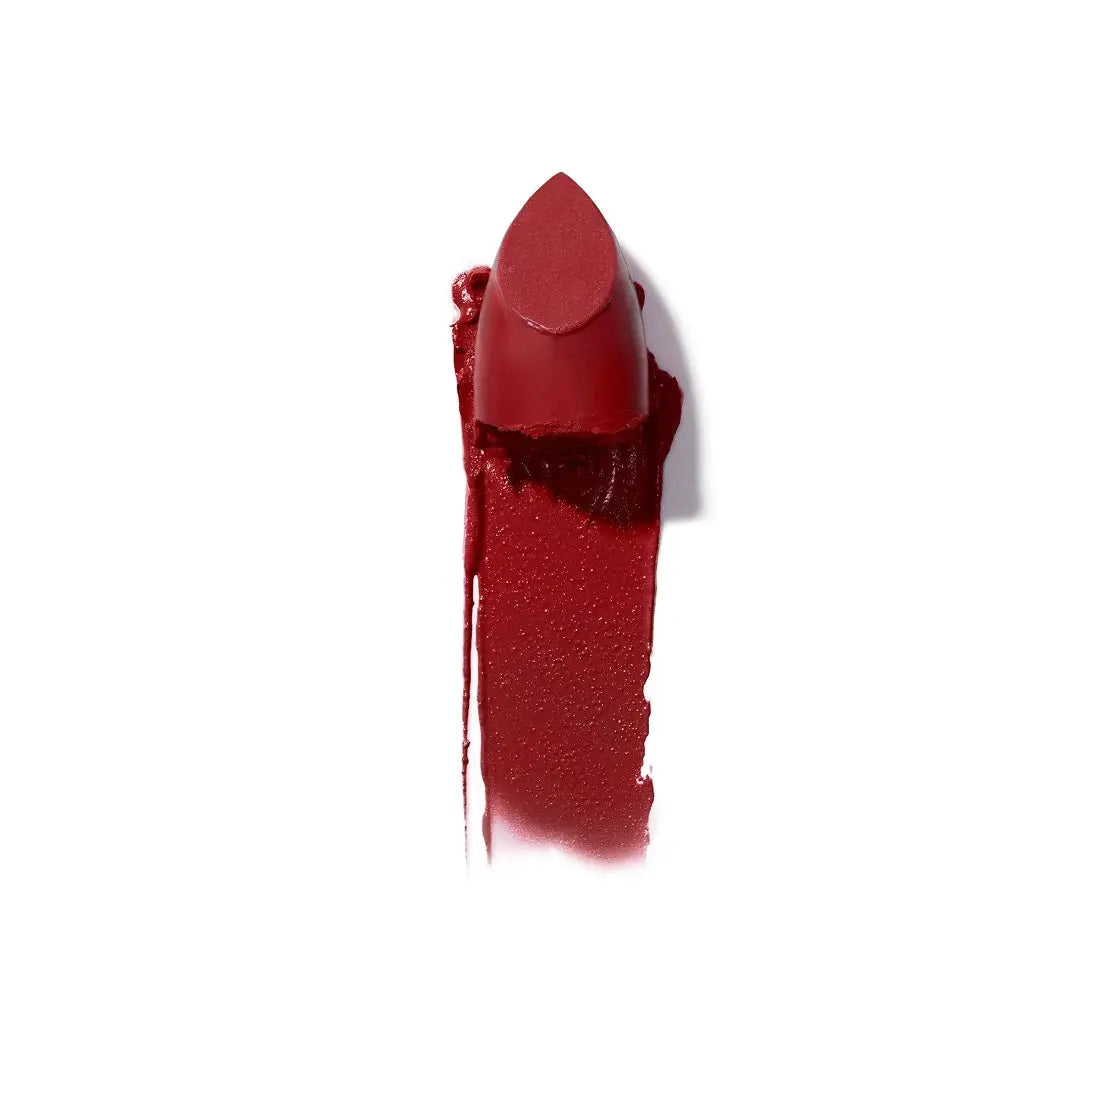 Ilia Beauty Color Block Lipstick 4g - True Red Free Shipping